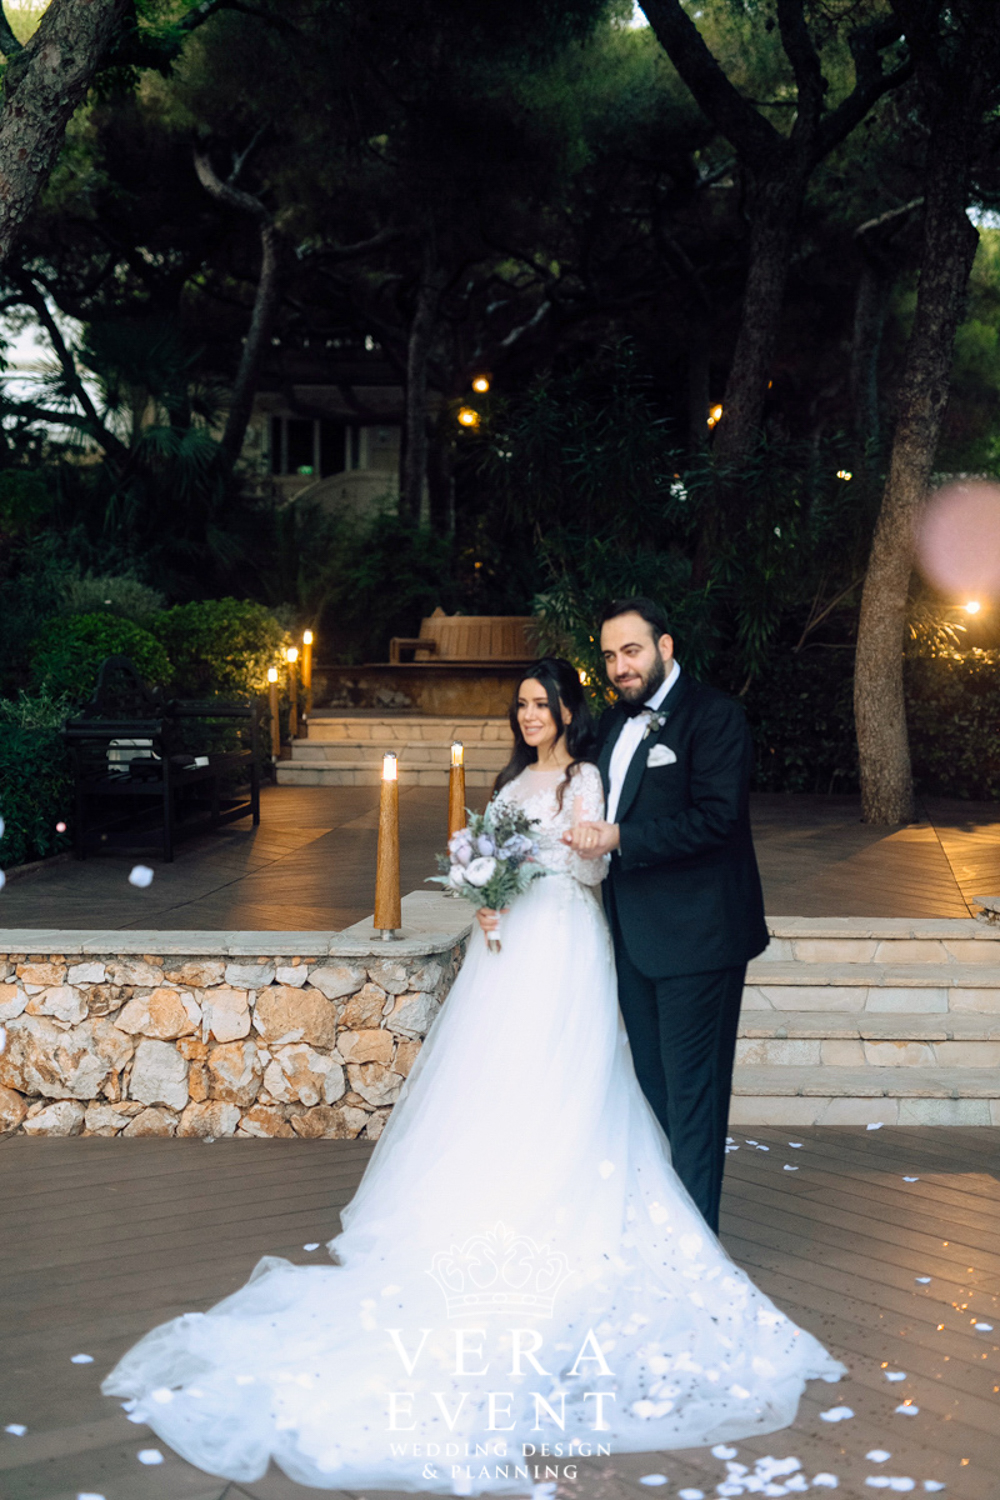 Nilay & İbrahim #yurtdışında düğün #roma'da düğün